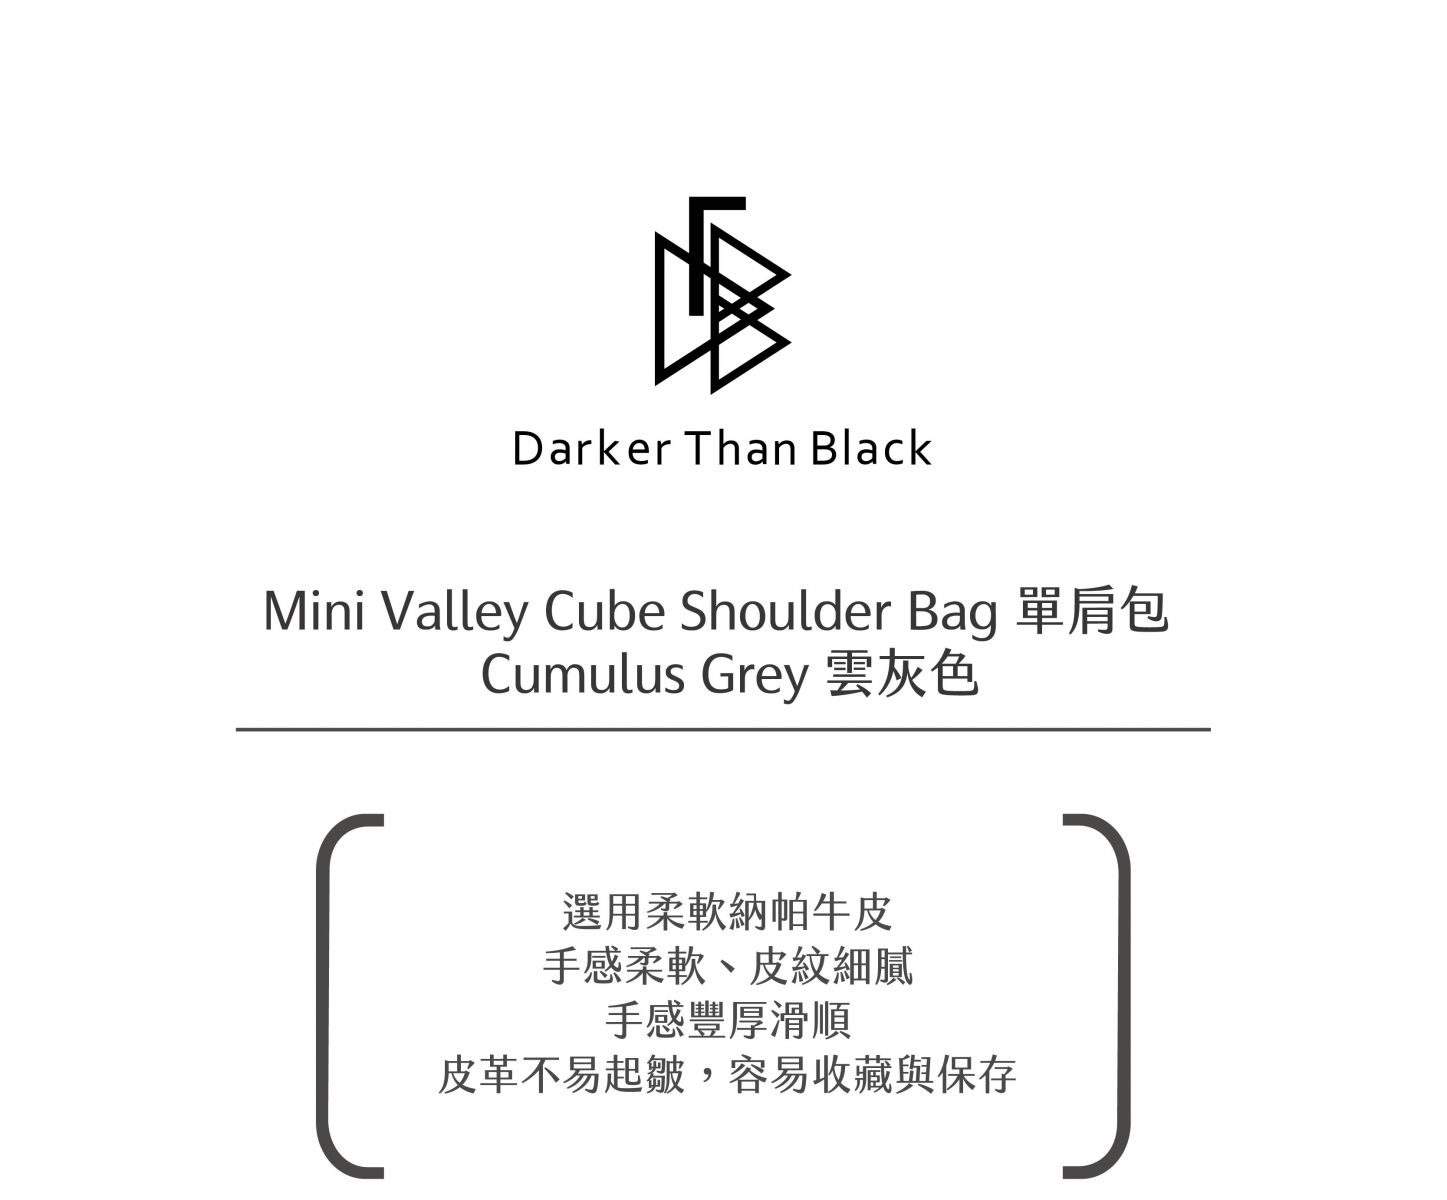 Mini Valley Cube Shoulder 迷你方型軟包(納帕牛皮) - Cumulus Grey 雲灰色